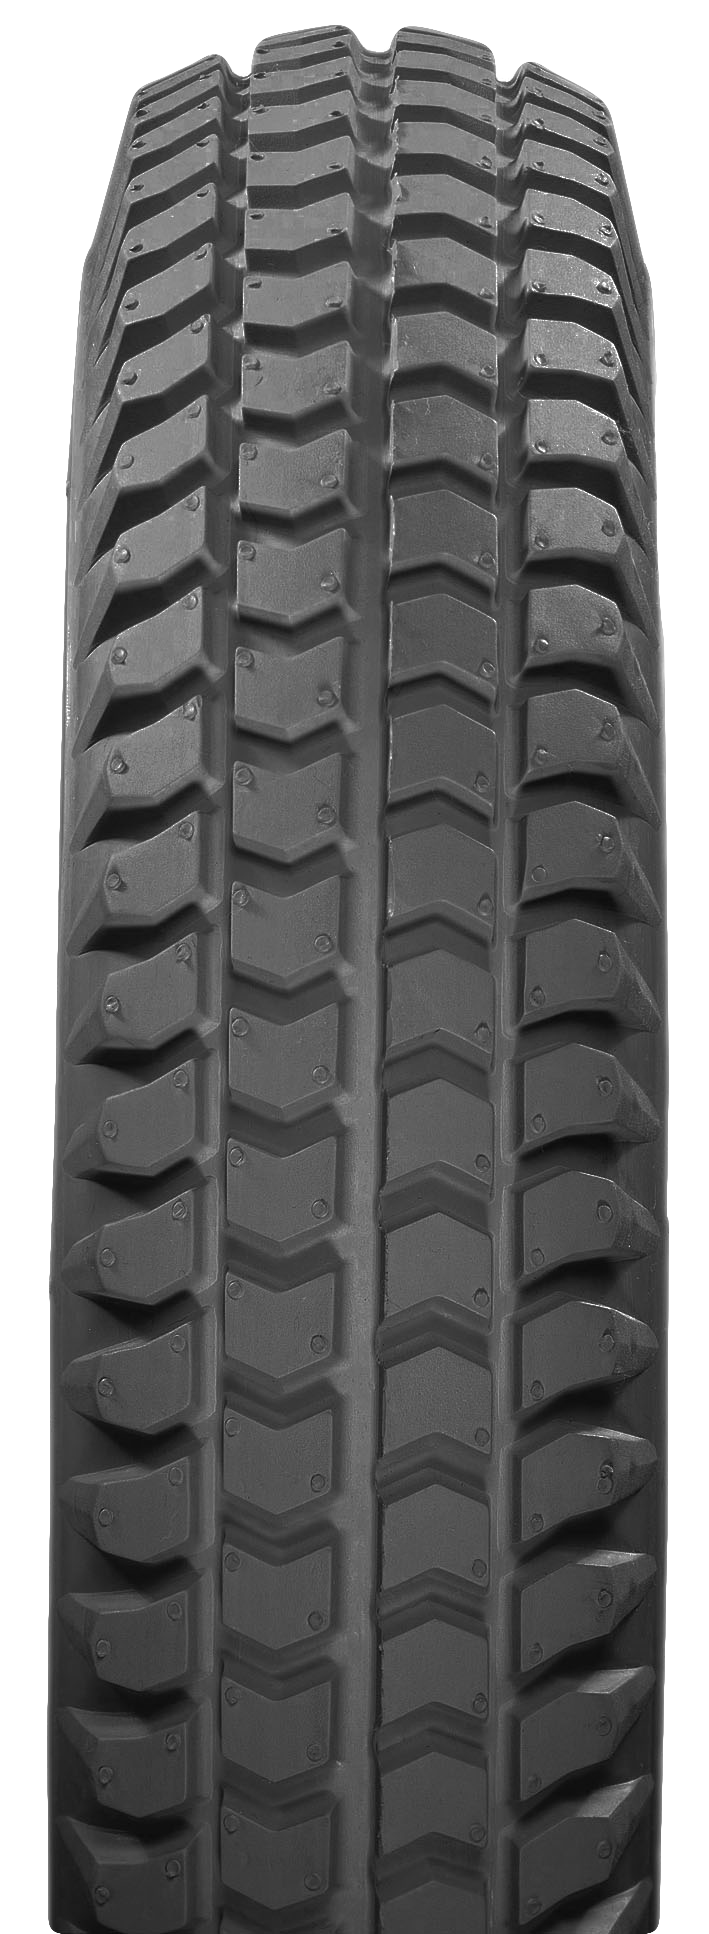 3.00-8" (14x3") 350mmx70mm  Black All Weather Tire